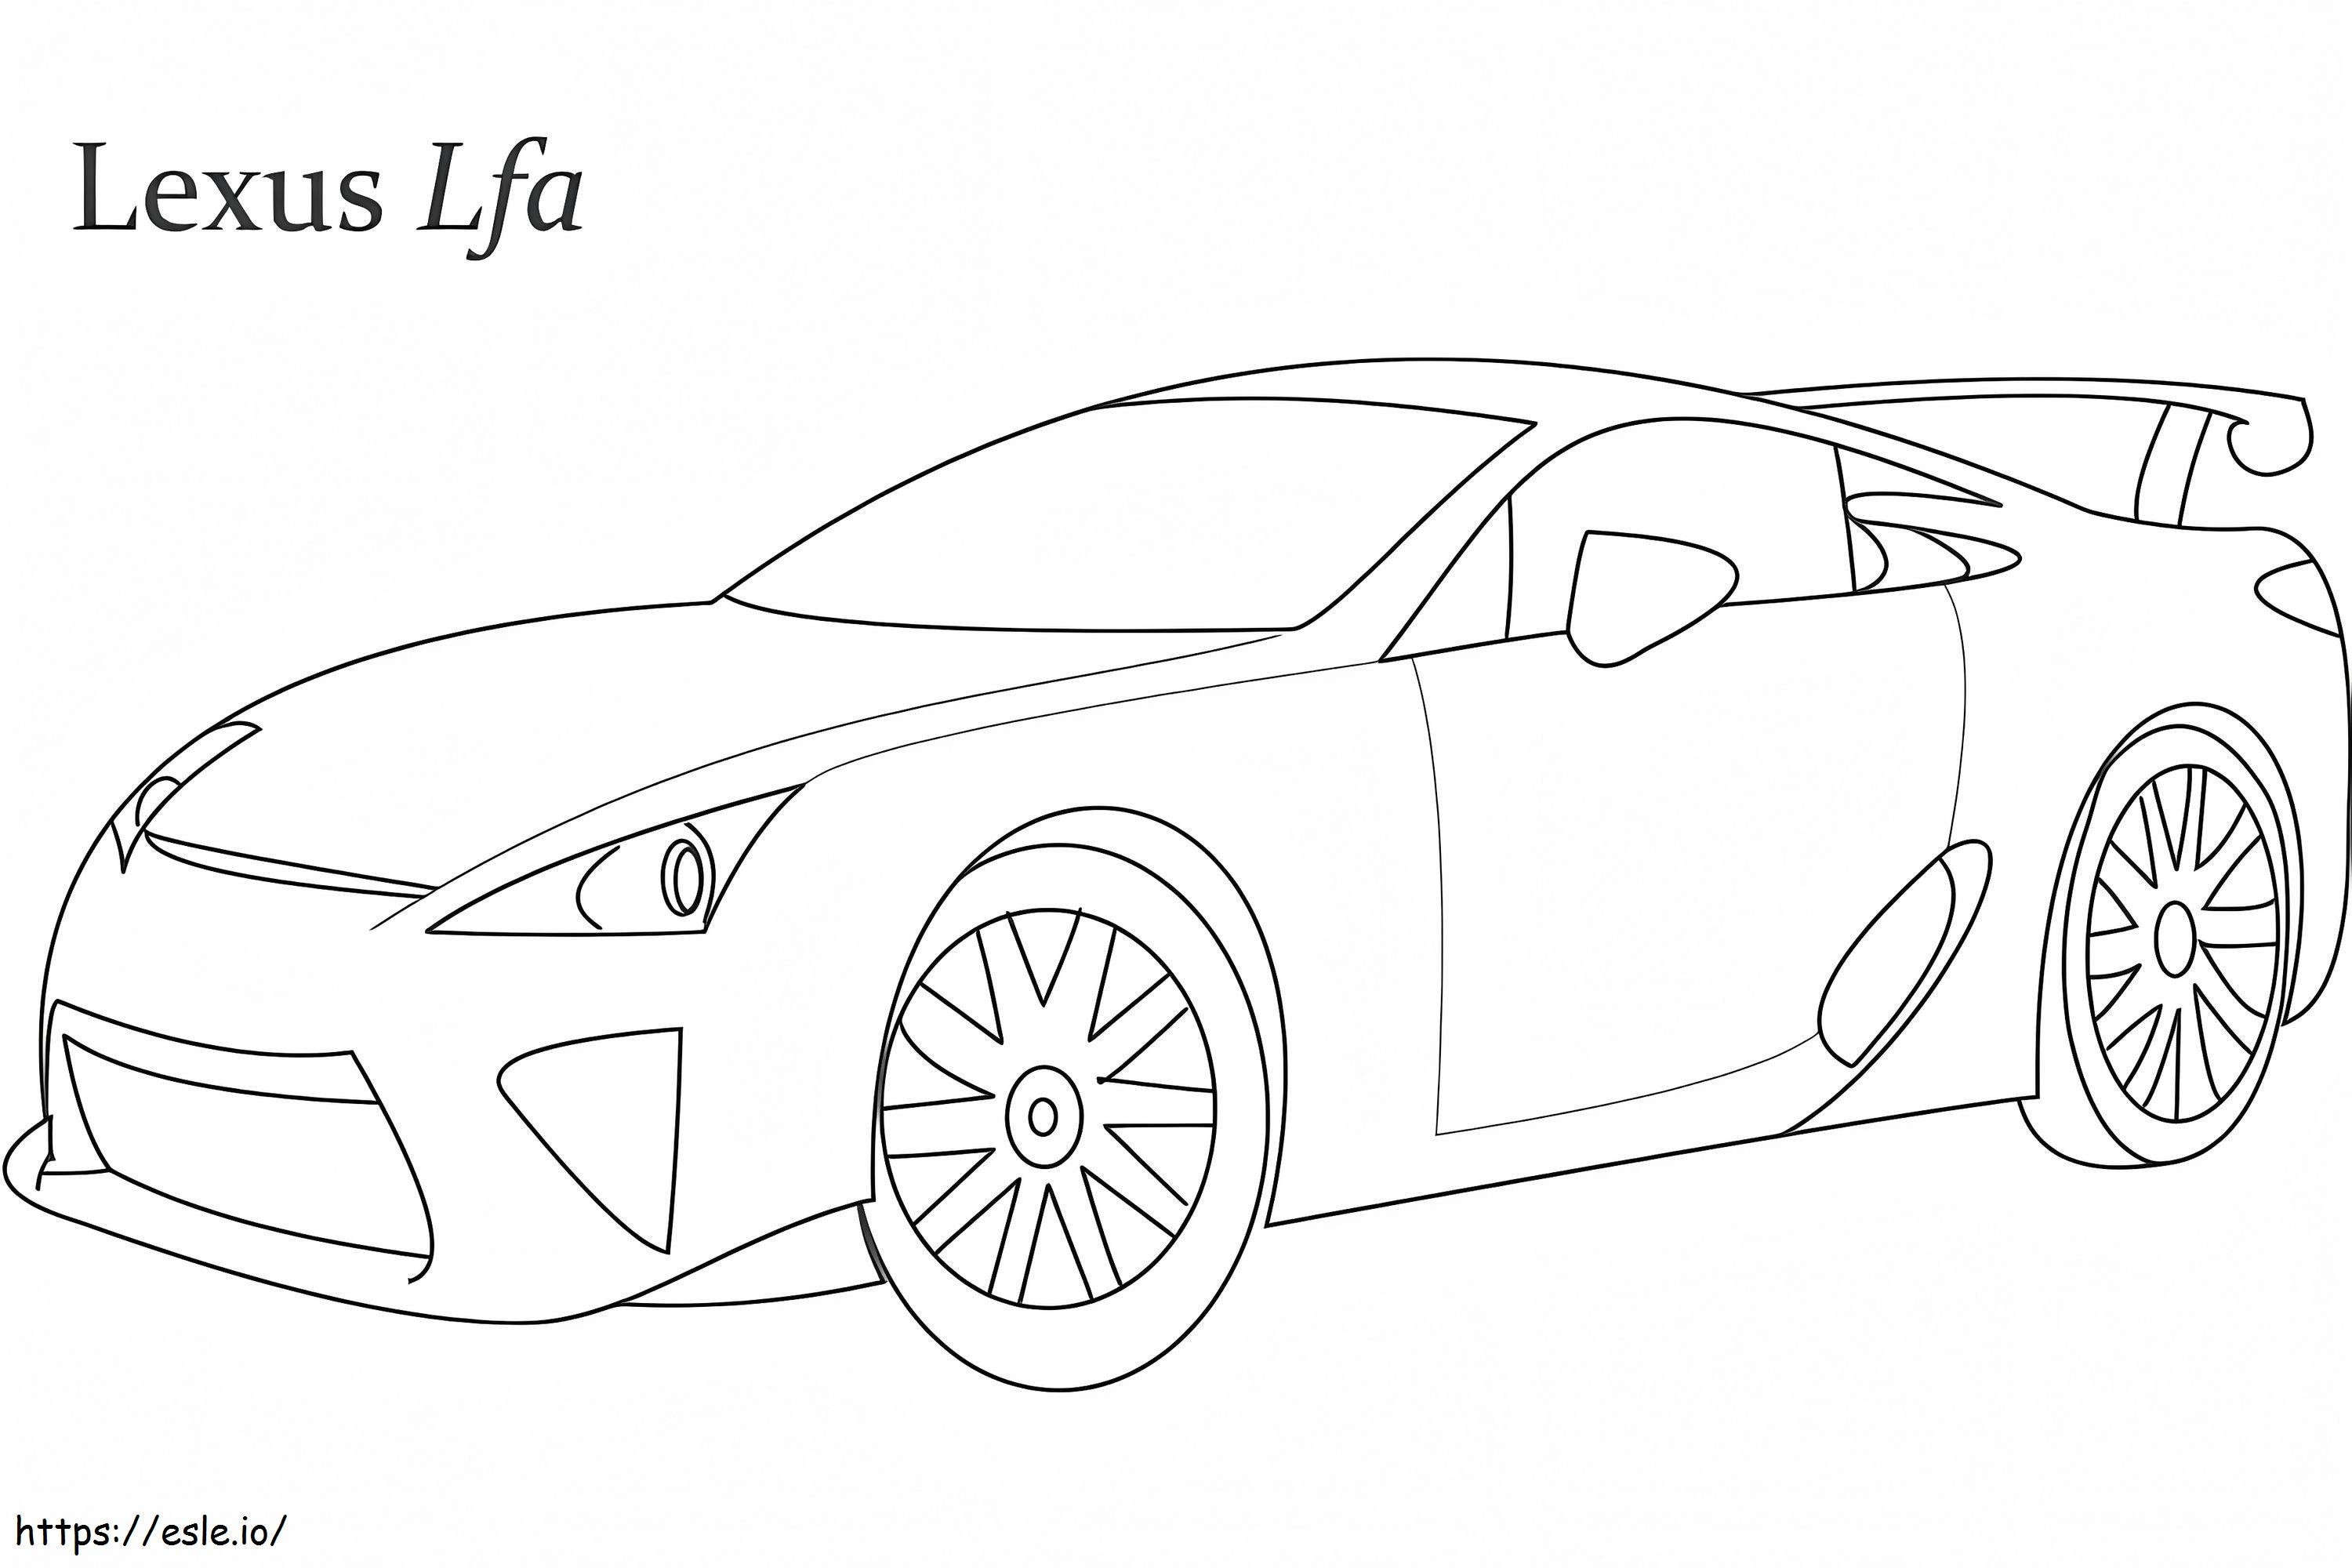 Lexus Lfa Race Car coloring page